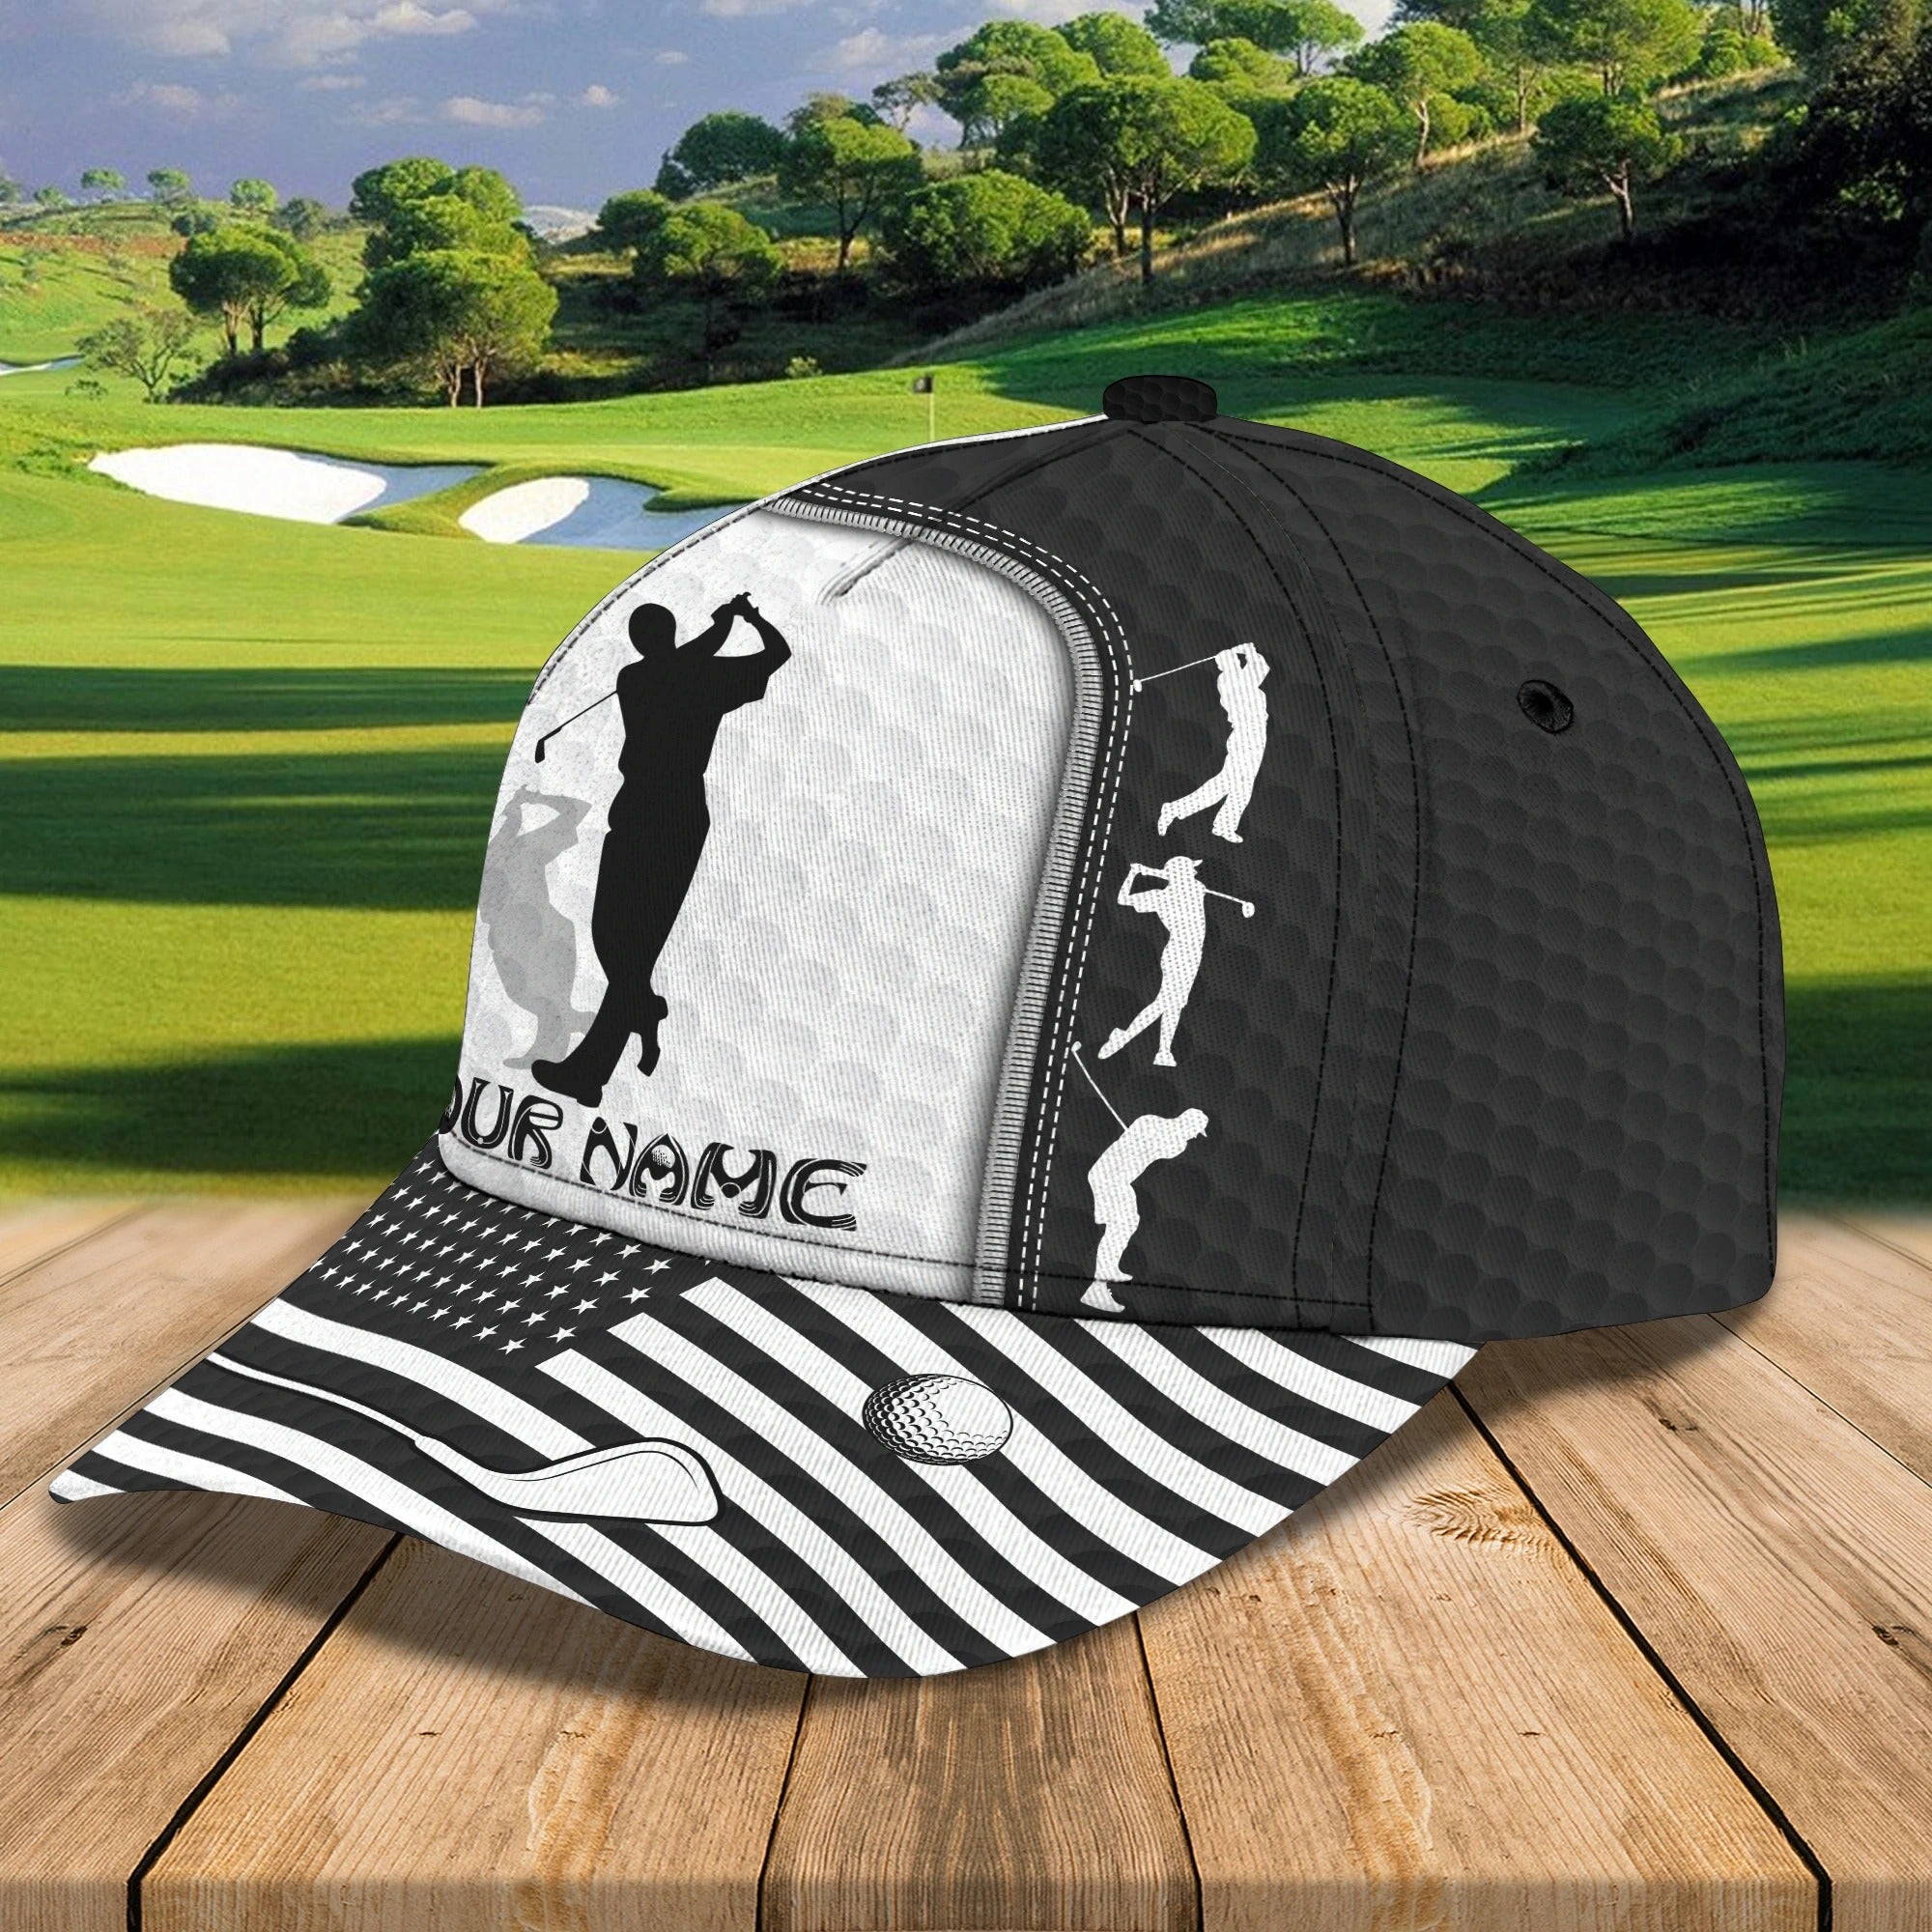 Personalized 3D Full Printed Baseball Cap For Golfer/ Goft Men Caps/ Golf Man Hat/ Cool Golf Hats